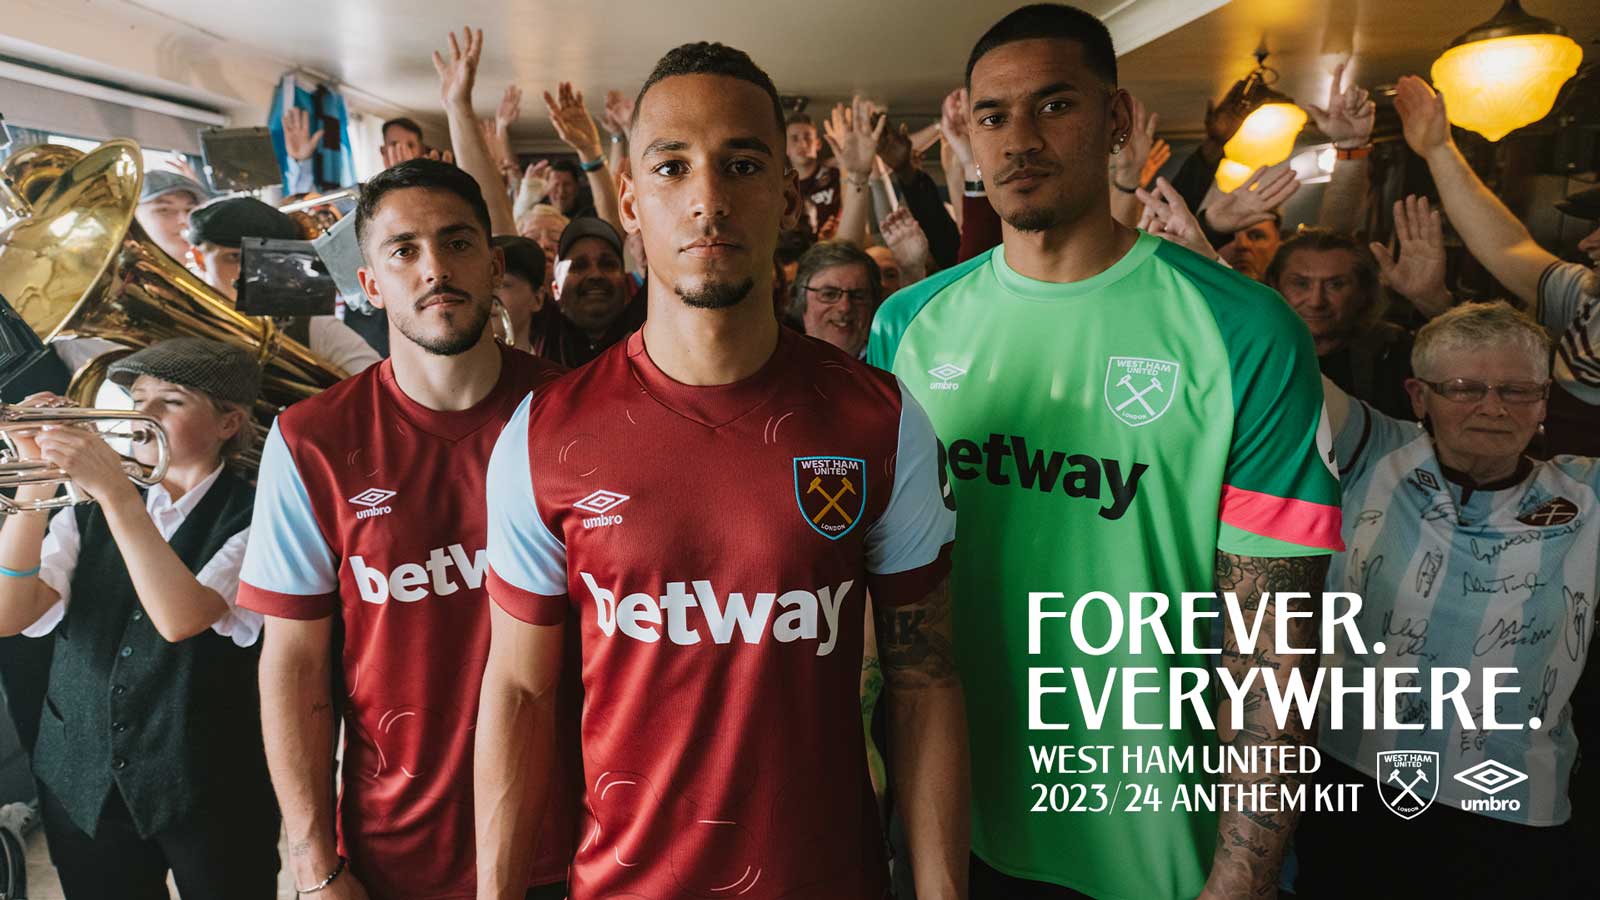 West Ham United's 2023/24 Anthem Kit